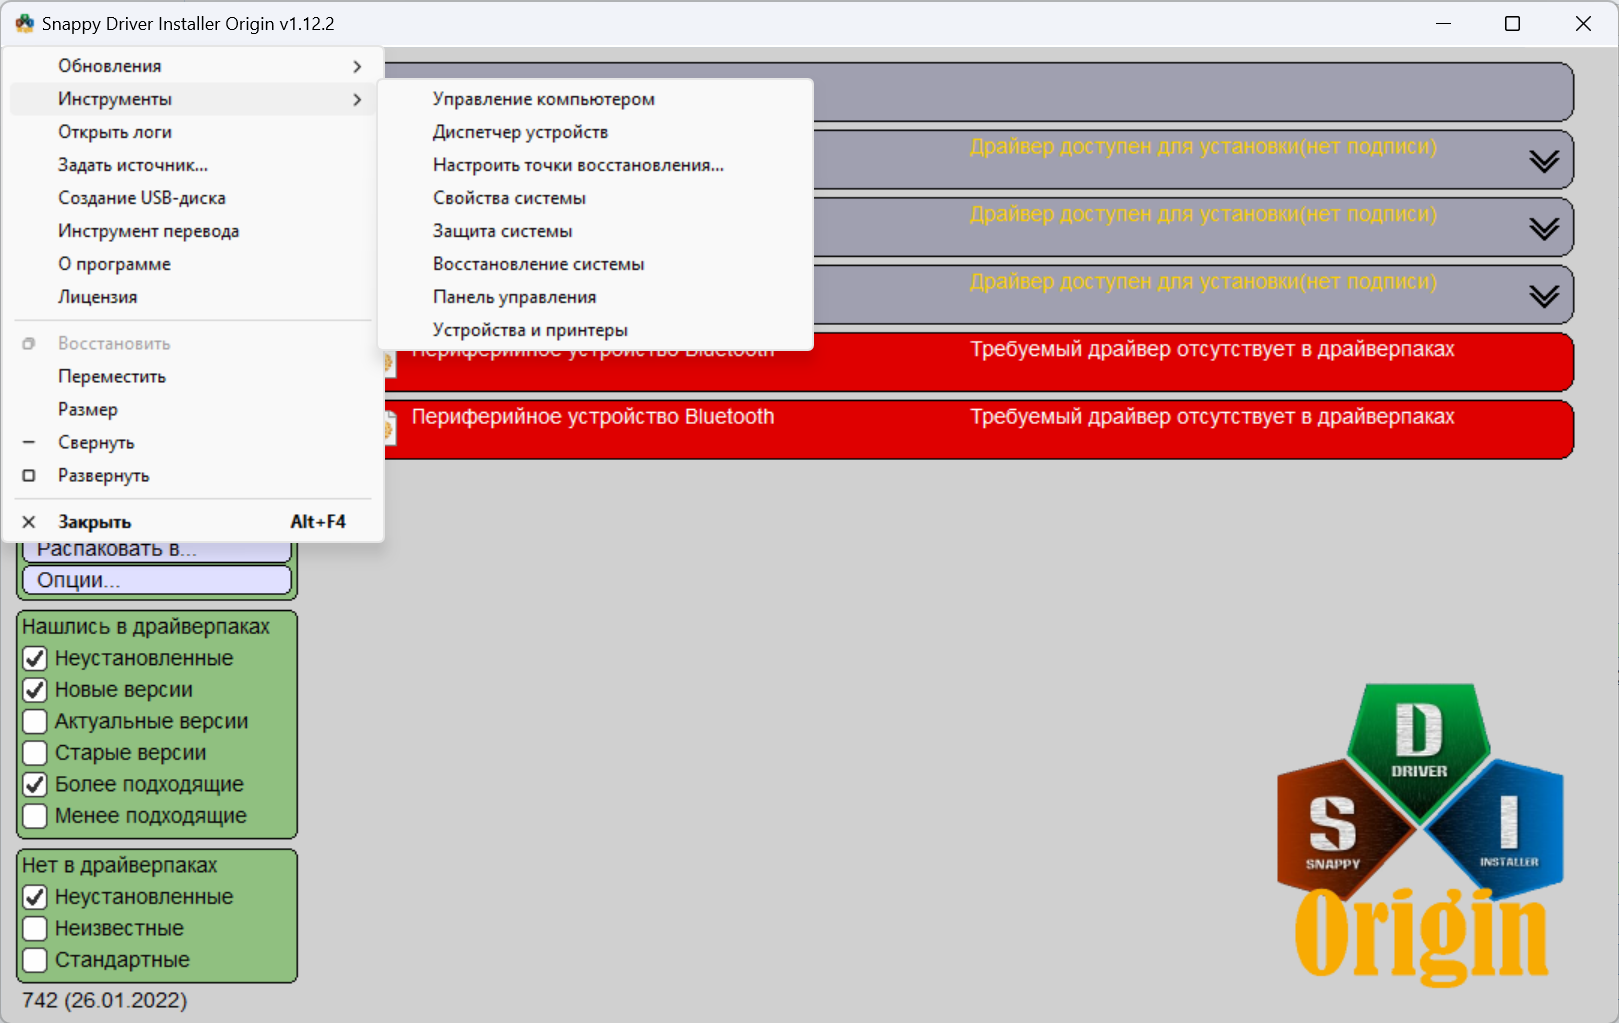 Snappy Driver Installer Origin R742 / Драйверпаки 22.03.3 [Multi/Ru]